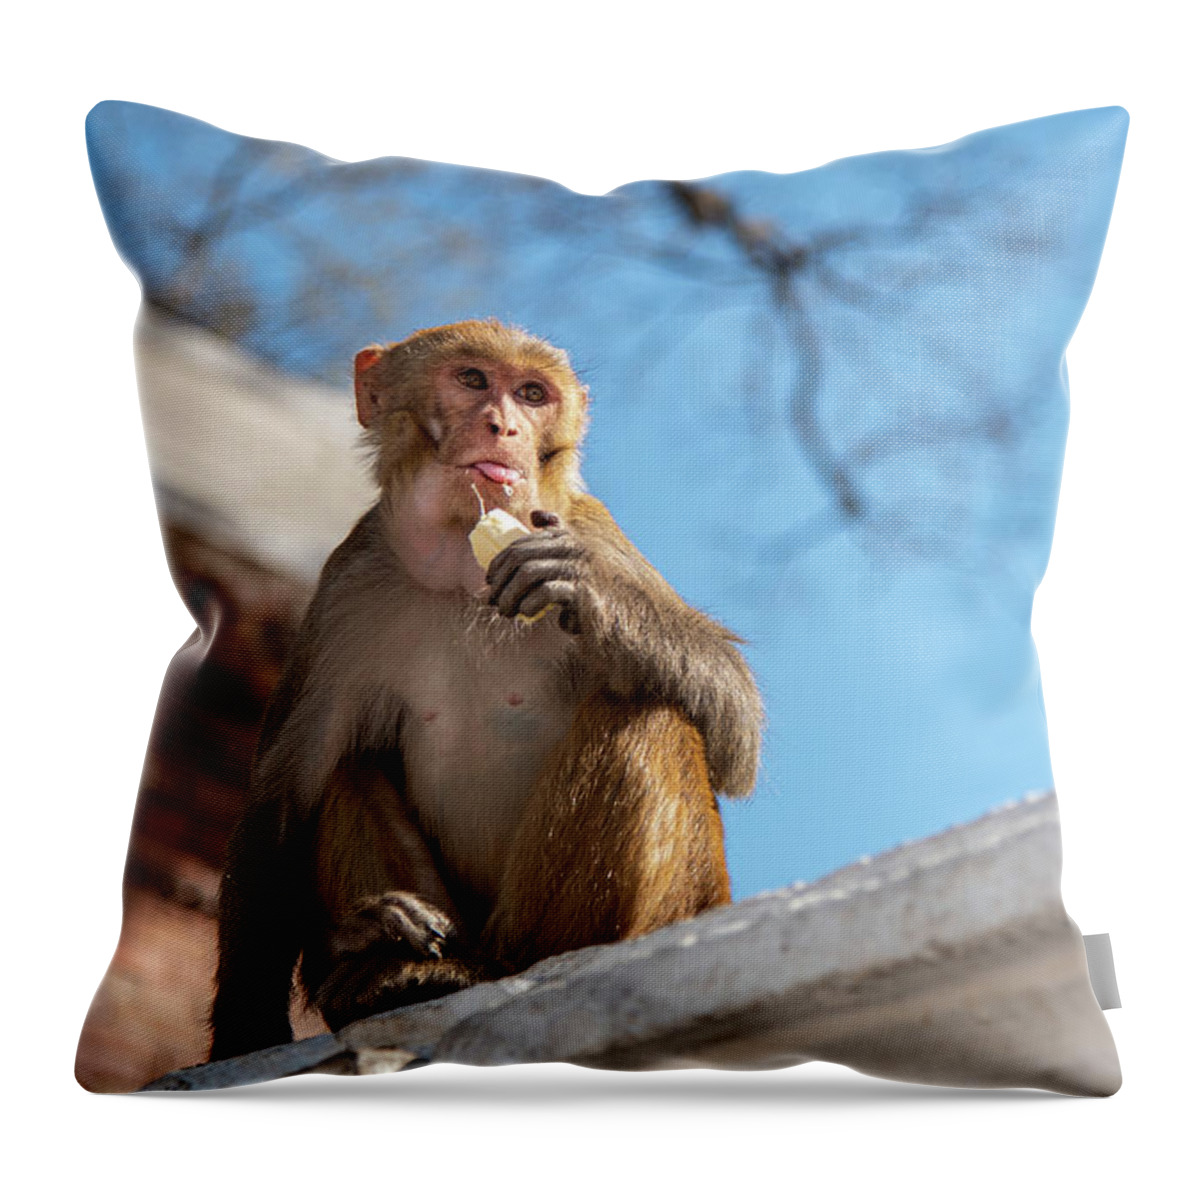 Monkey Decorative Pillow